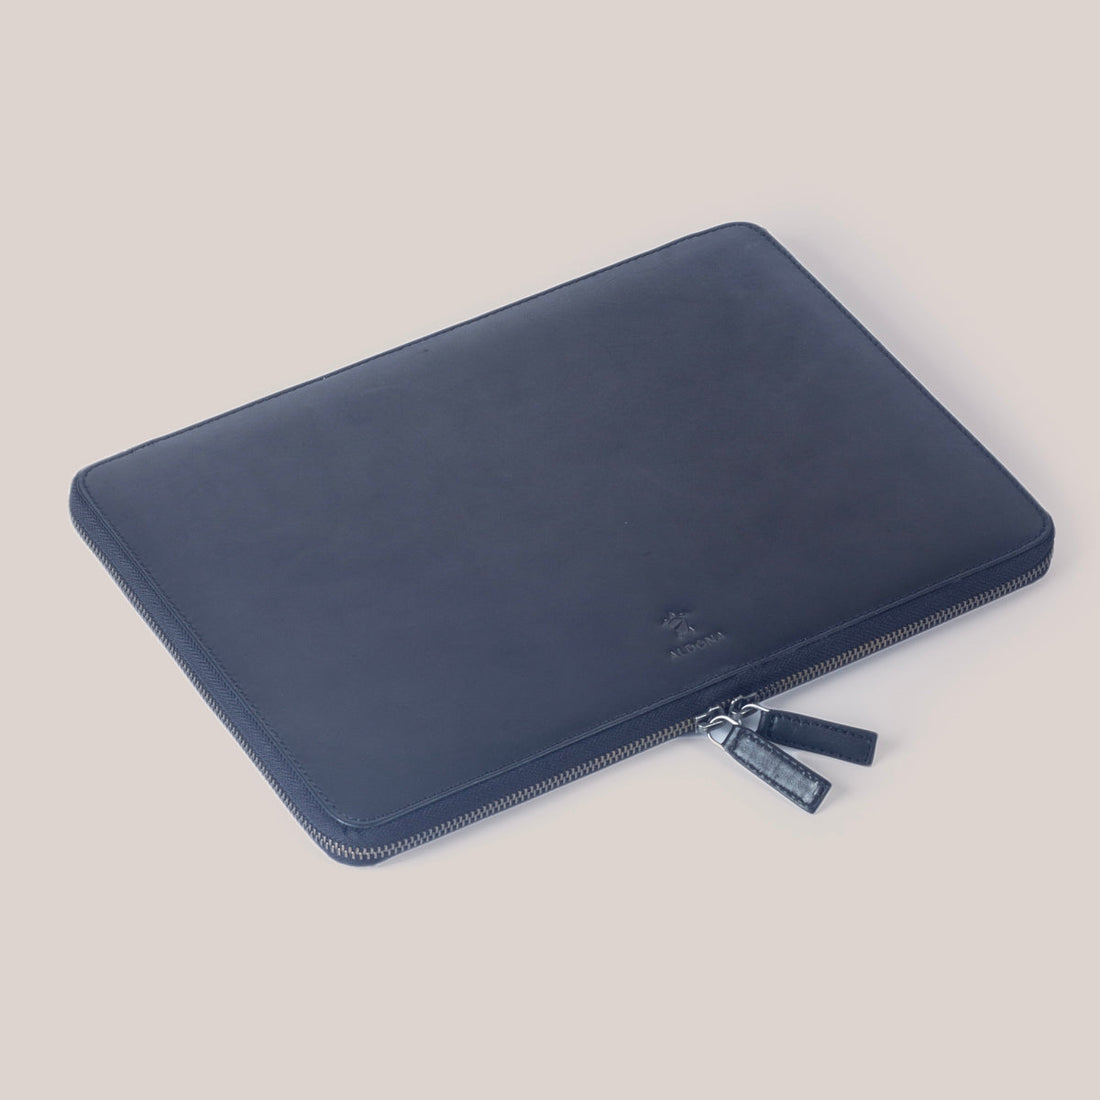 Microsoft Surface Laptop Studio Zippered Laptop Case - Burnt Tobacco